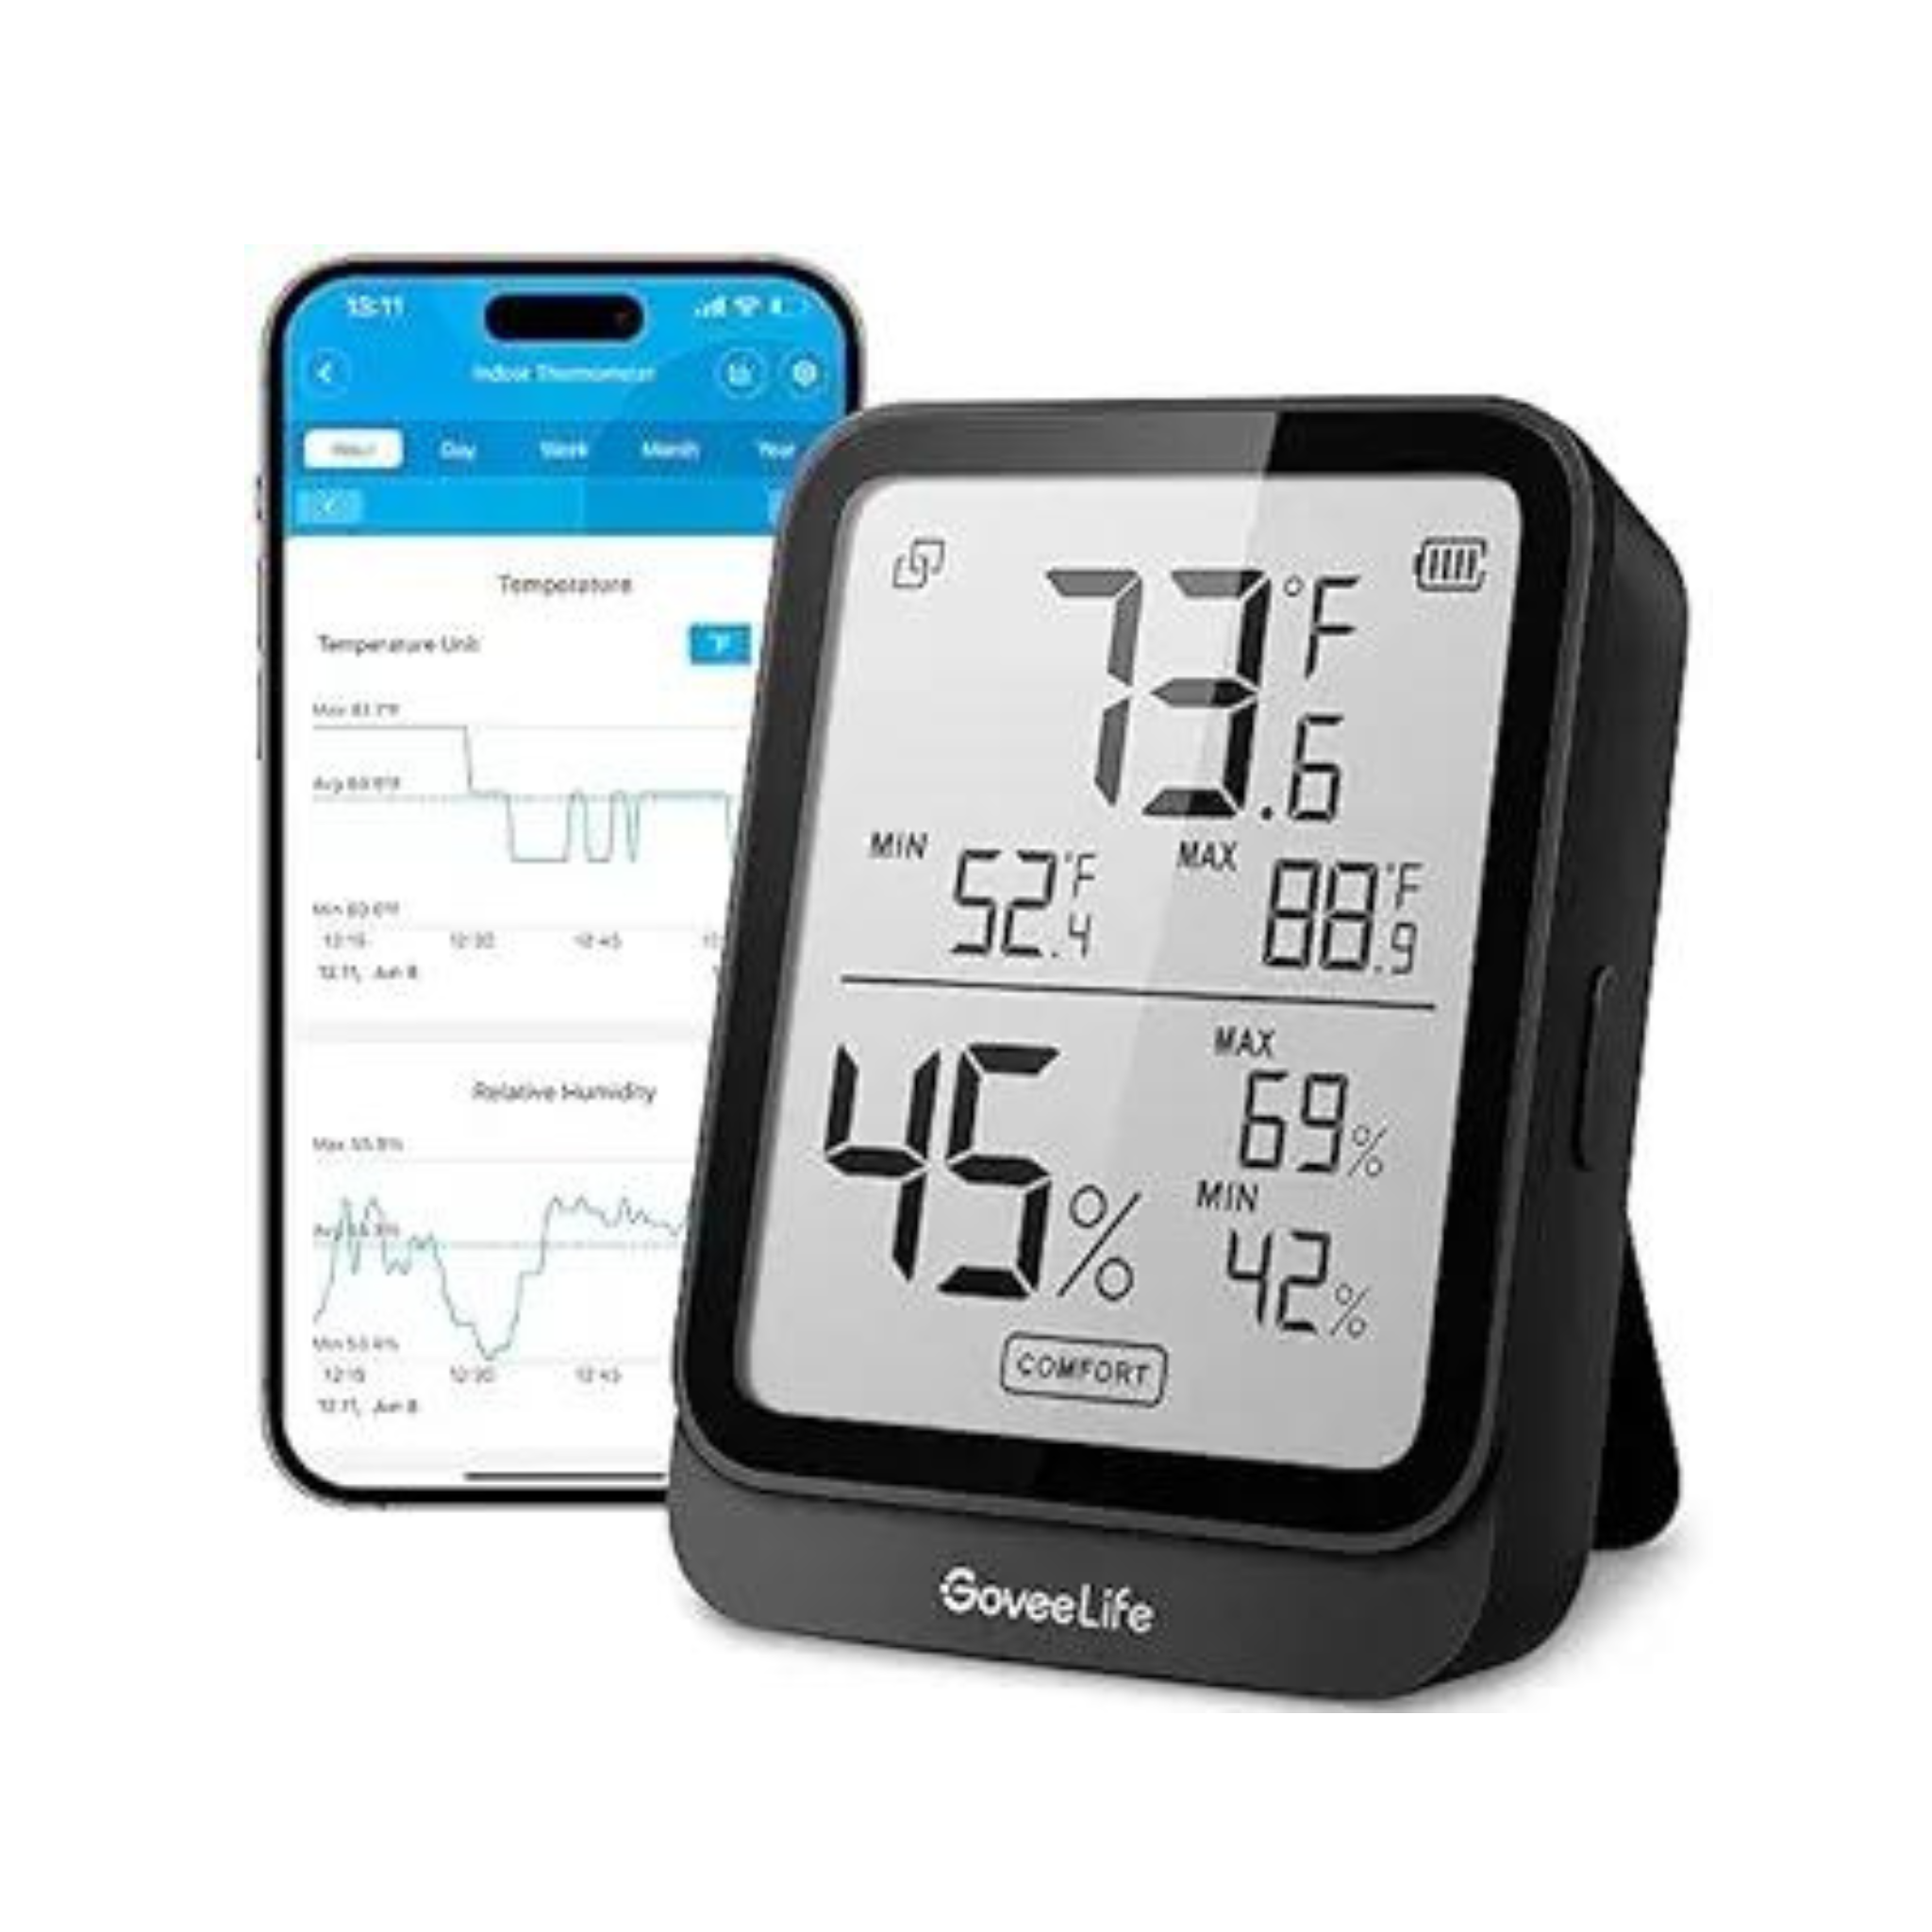 GoveeLife H5104 Bluetooth Hygrometer Thermometer (Black)